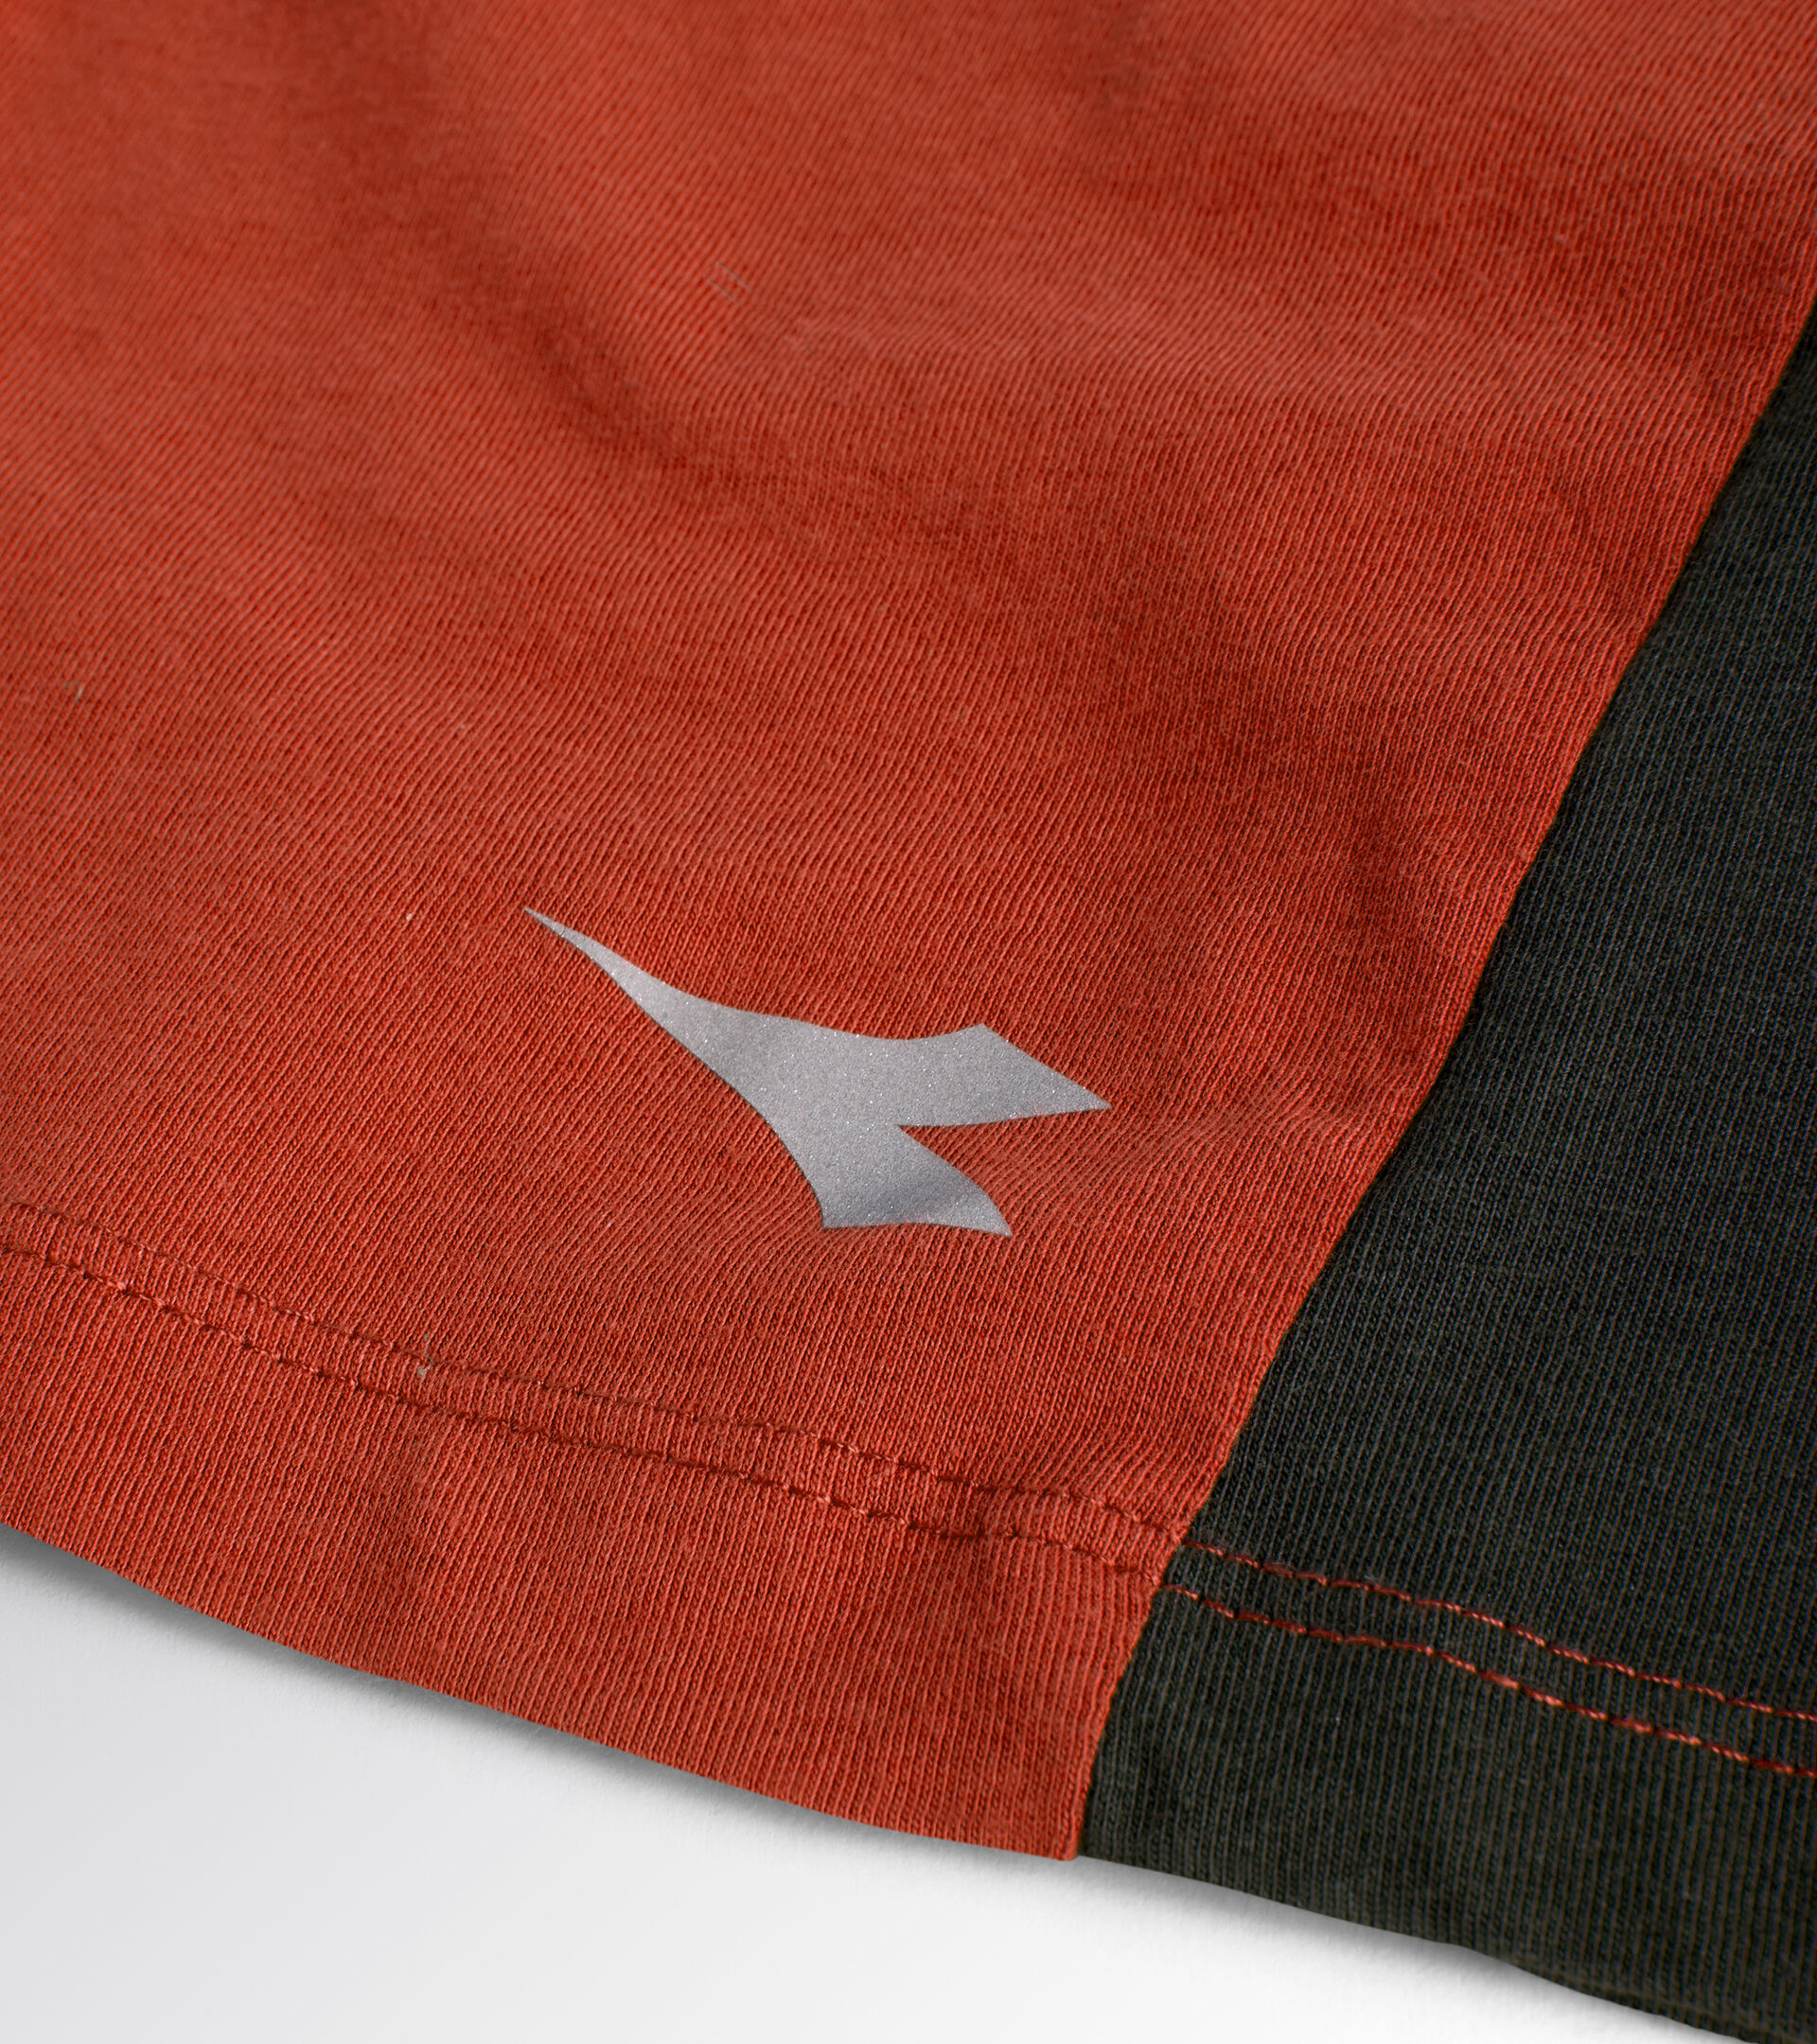 Short-sleeved work T-shirt T-SHIRT CROSS ORGANIC RED MEDLAR - Utility